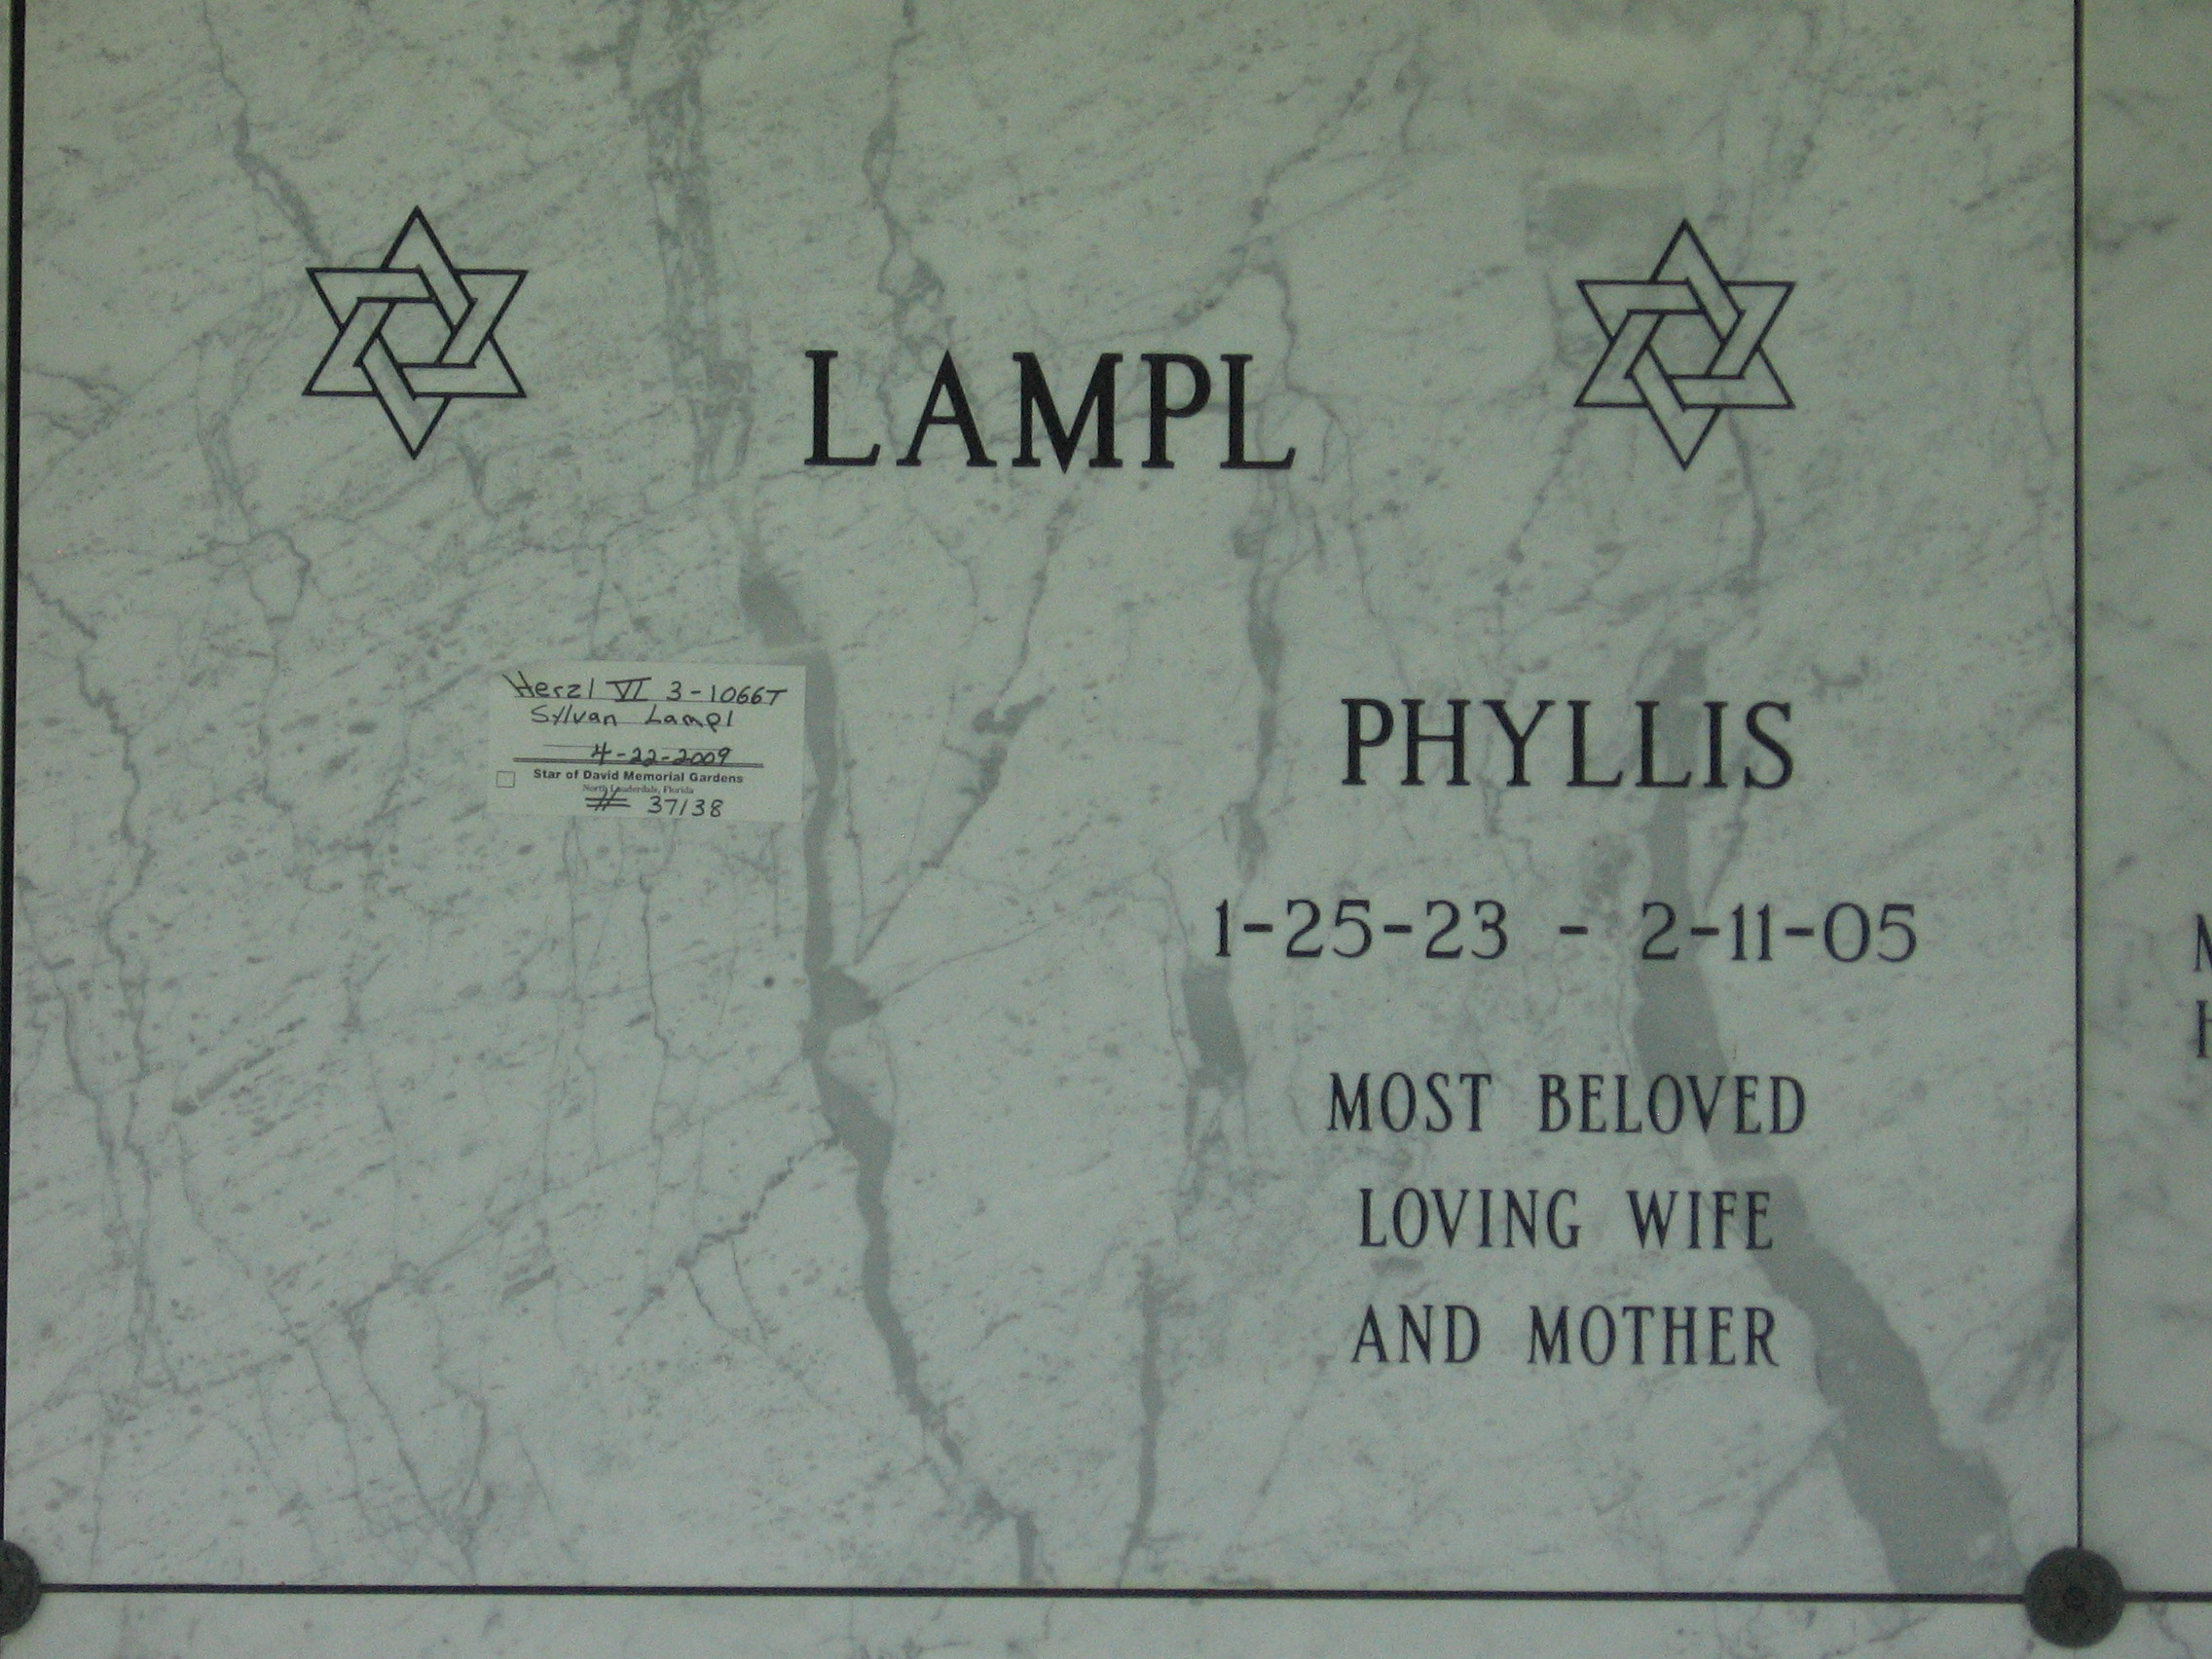 Phyllis Lampl